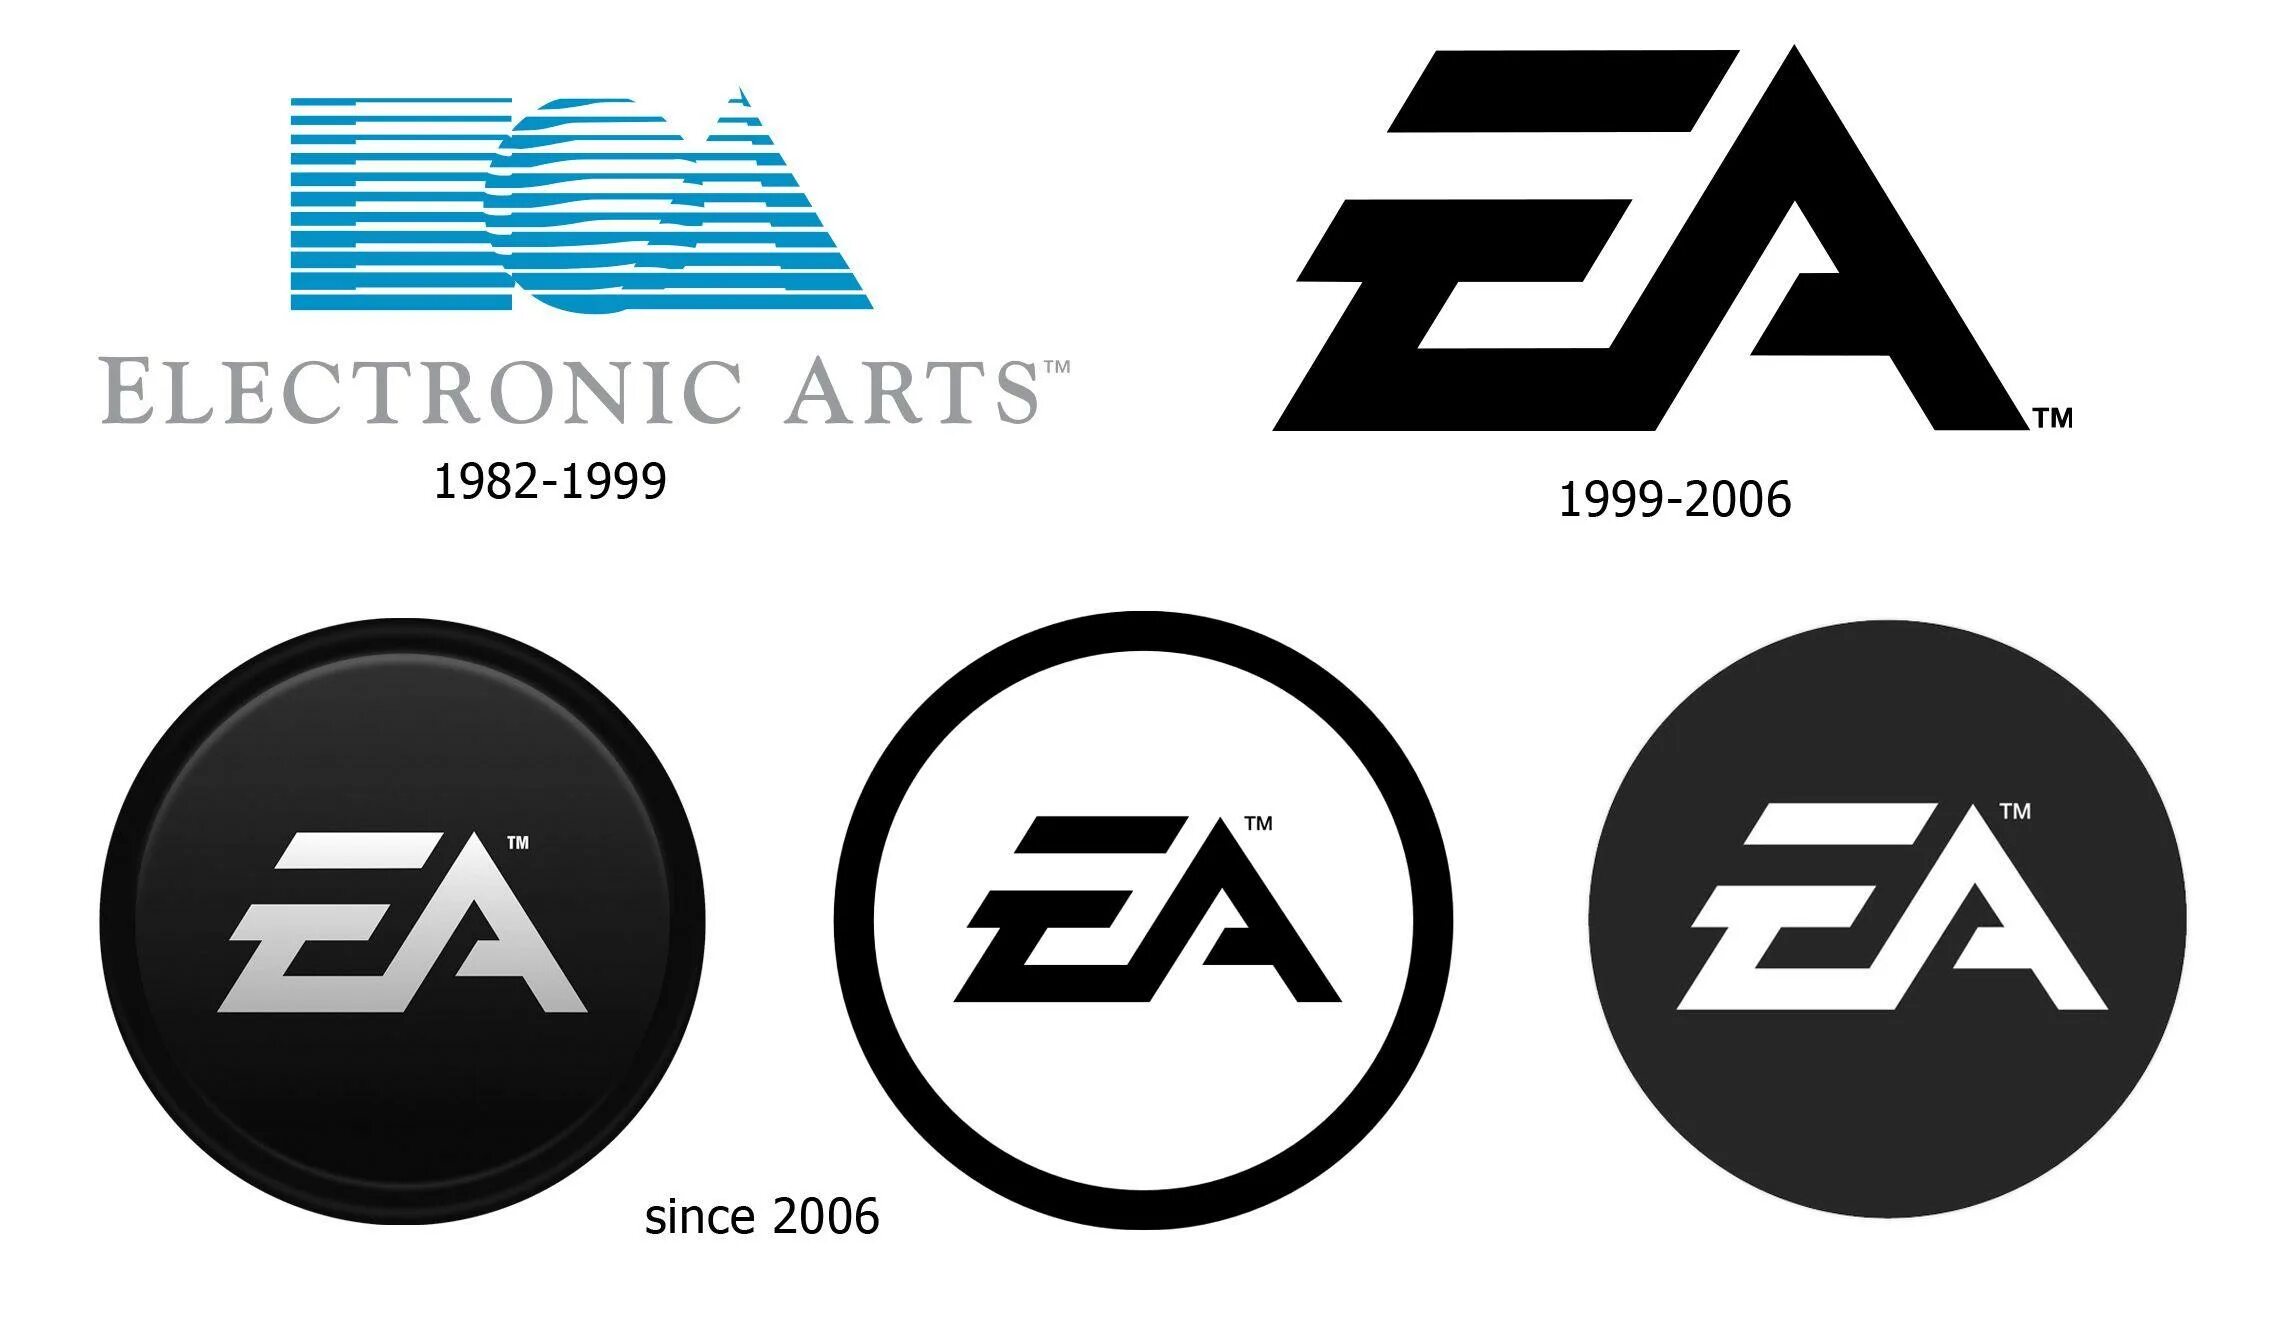 Электроник Артс Electronic Arts. Логотипы игр Electronic Arts. EA логотип. Эмблема электроник Артс. Игры электроник артс